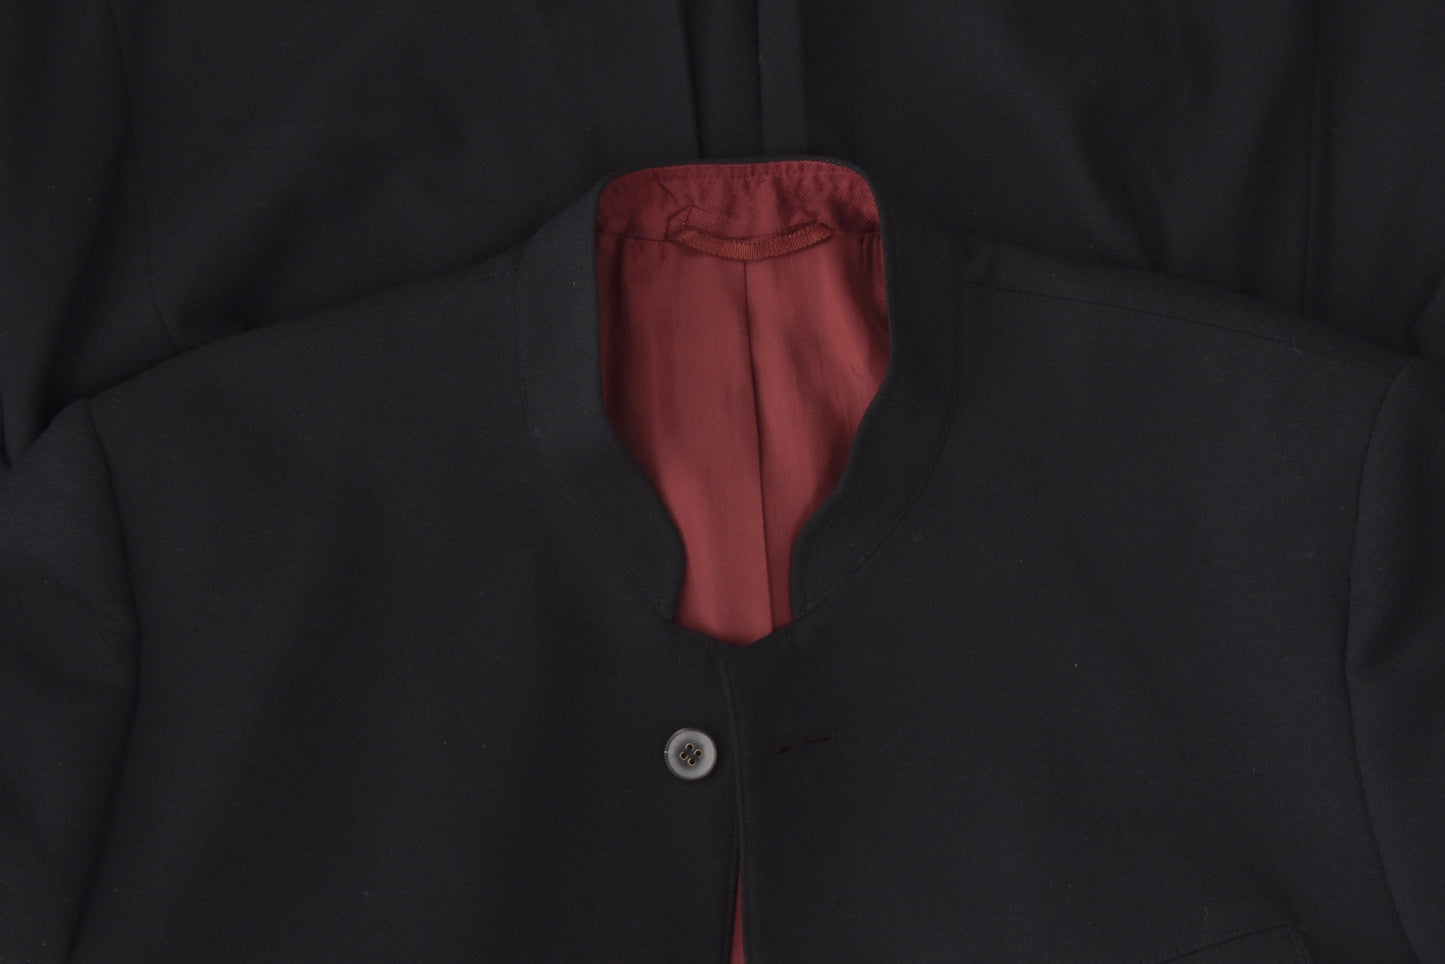 Gössl Wool Janker/Jacket Size 54 - Black